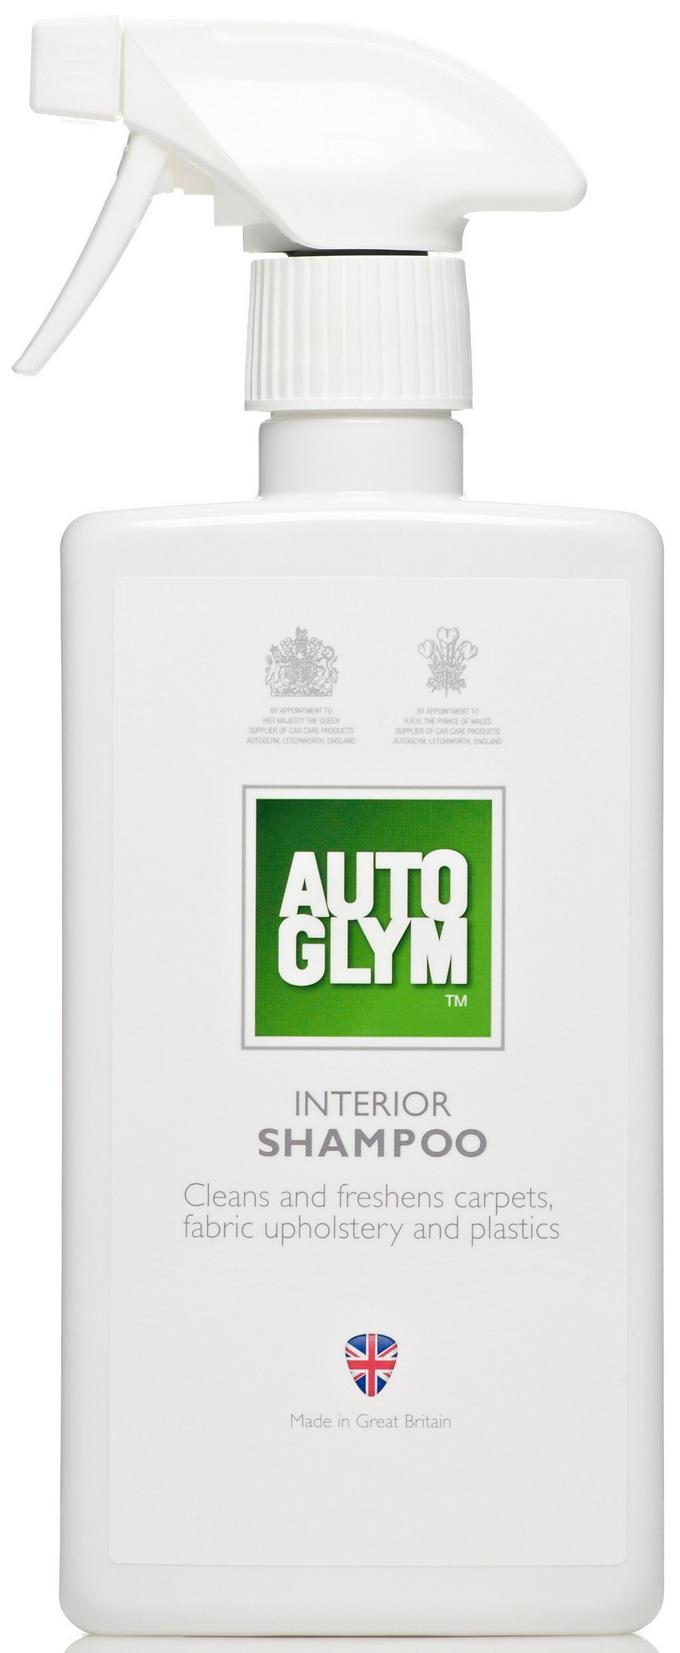  Autoglym Interior Shampoo, 500ml - Car Interior